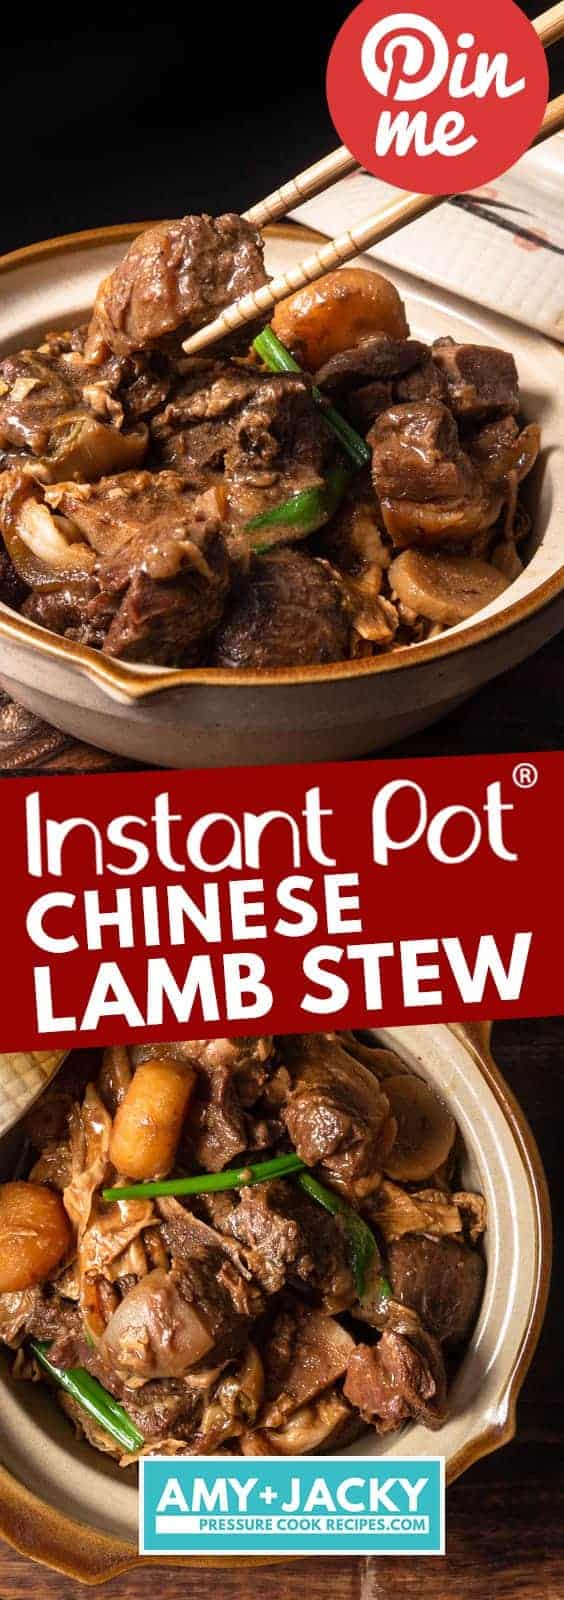 Instant Pot Lamb Stew | Pressure Cooker Lamb Stew | Instapot Lamb Stew | Chinese Lamb Stew | Lamb Hot Pot | Lamb Recipes | Instant Pot Recipes | Pressure Cooker Recipes #instantpot #pressurecooker #recips #lamb #chinese